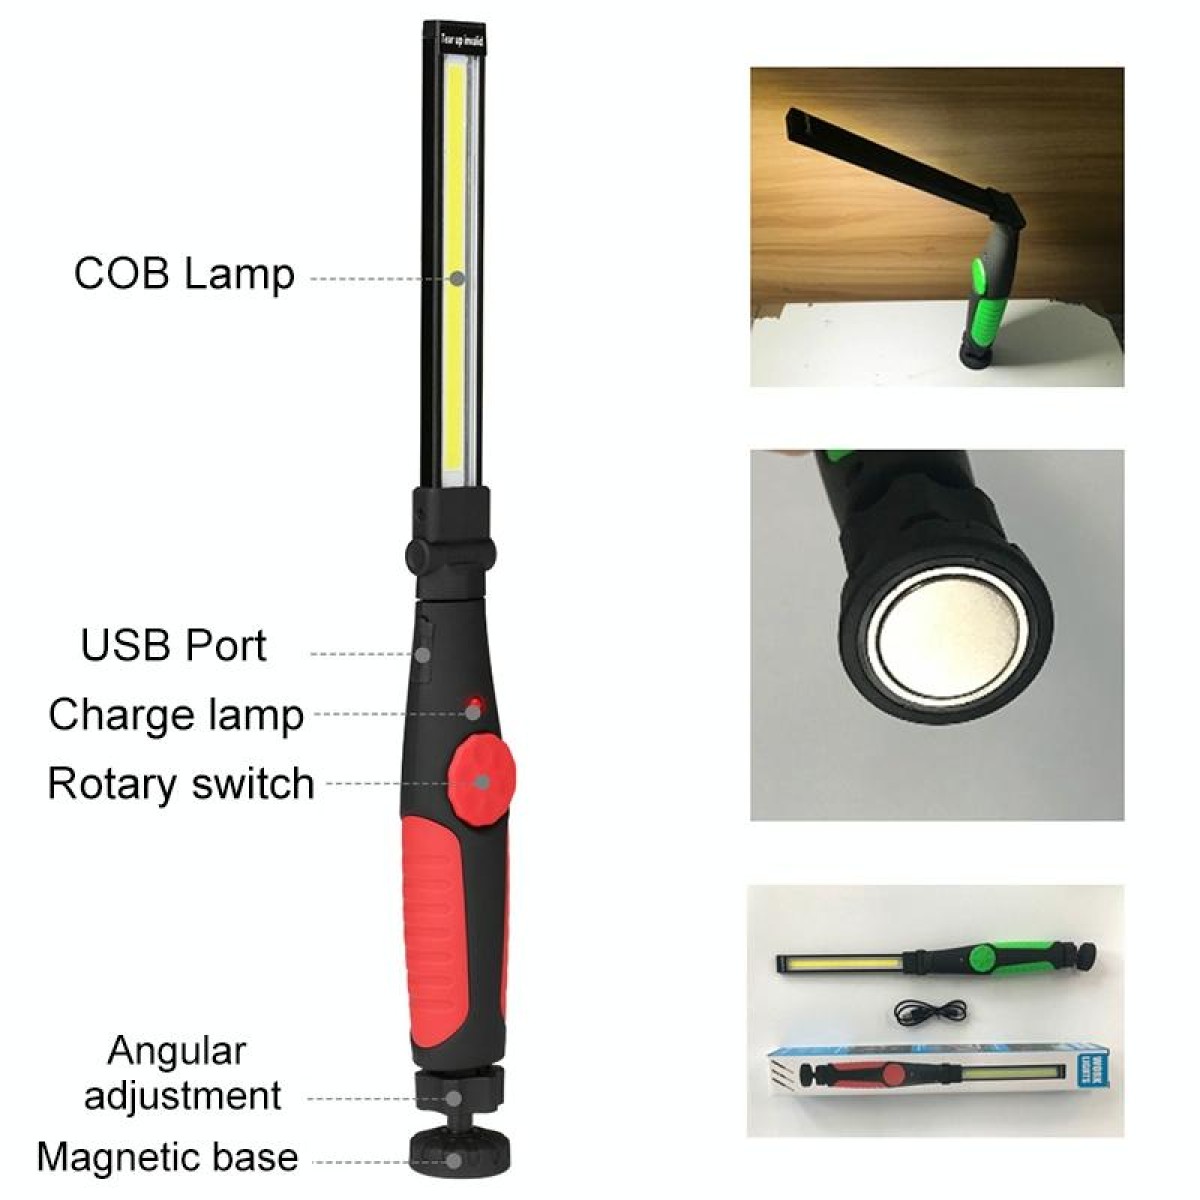 Car Home Car Work Maintenance Lamp Inspection Maintenance Light Emergency COB Charging Lamp(Red)